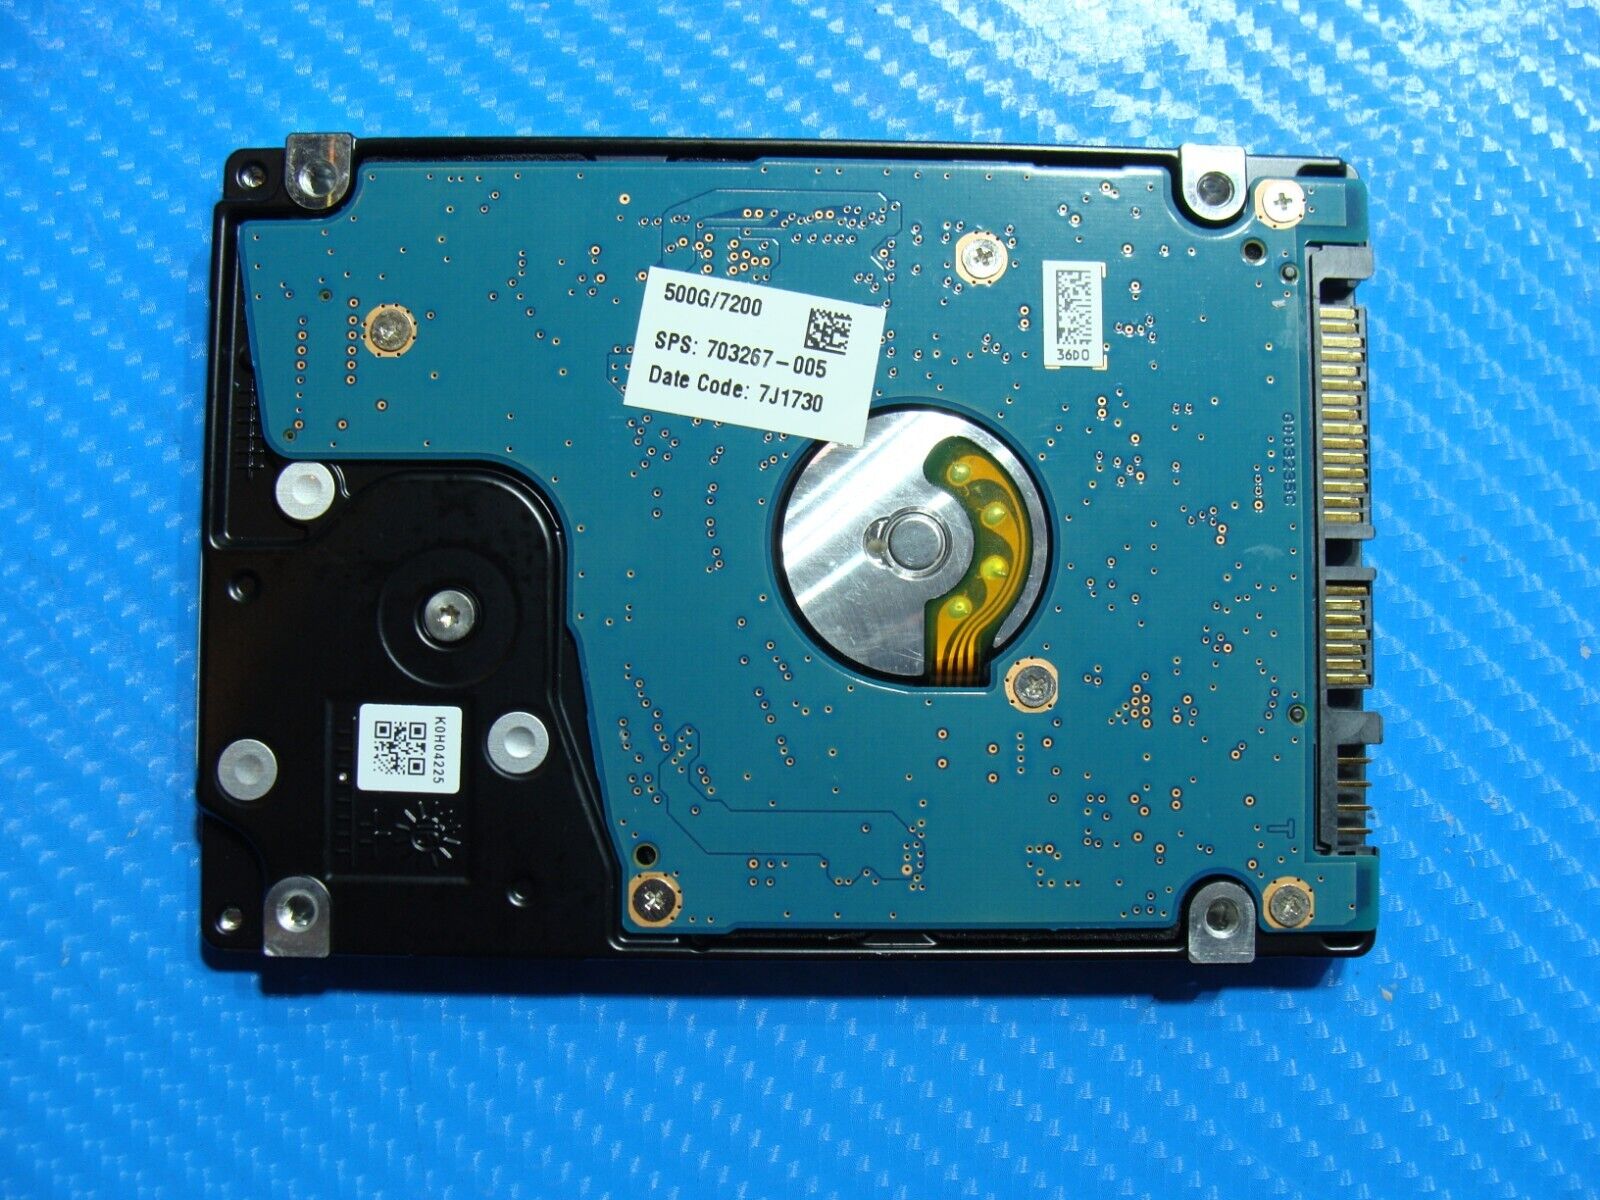 HP 250 G5 Toshiba SATA 2.5